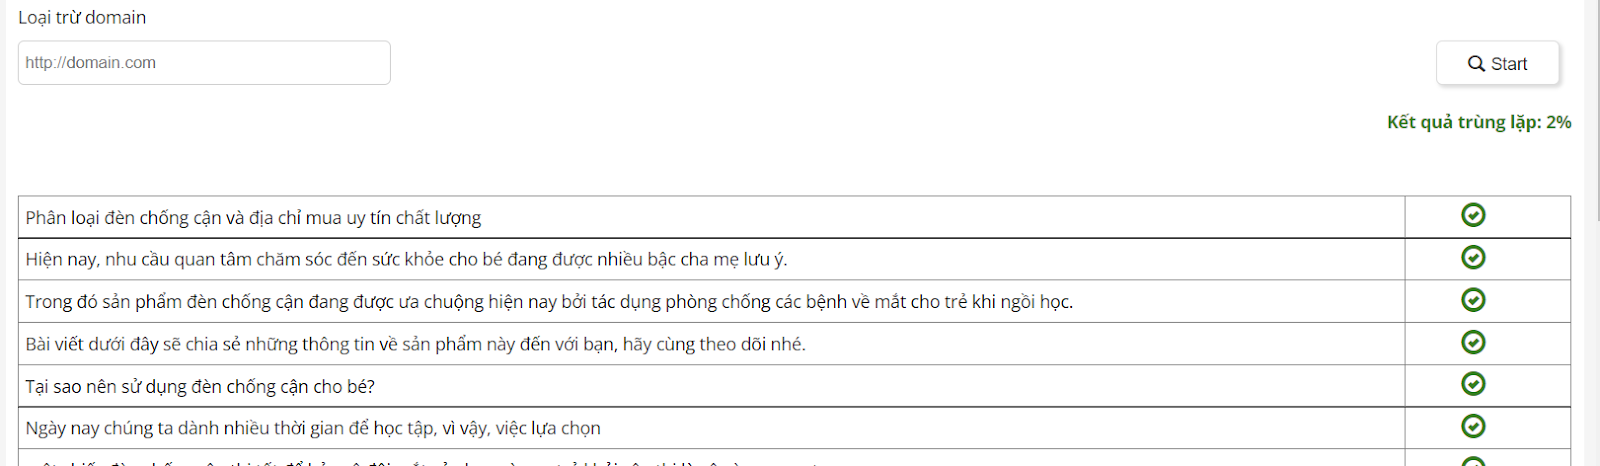 phan-loai-den-chong-can-va-dia-chi-mua-uy-tin-chat-luong-4